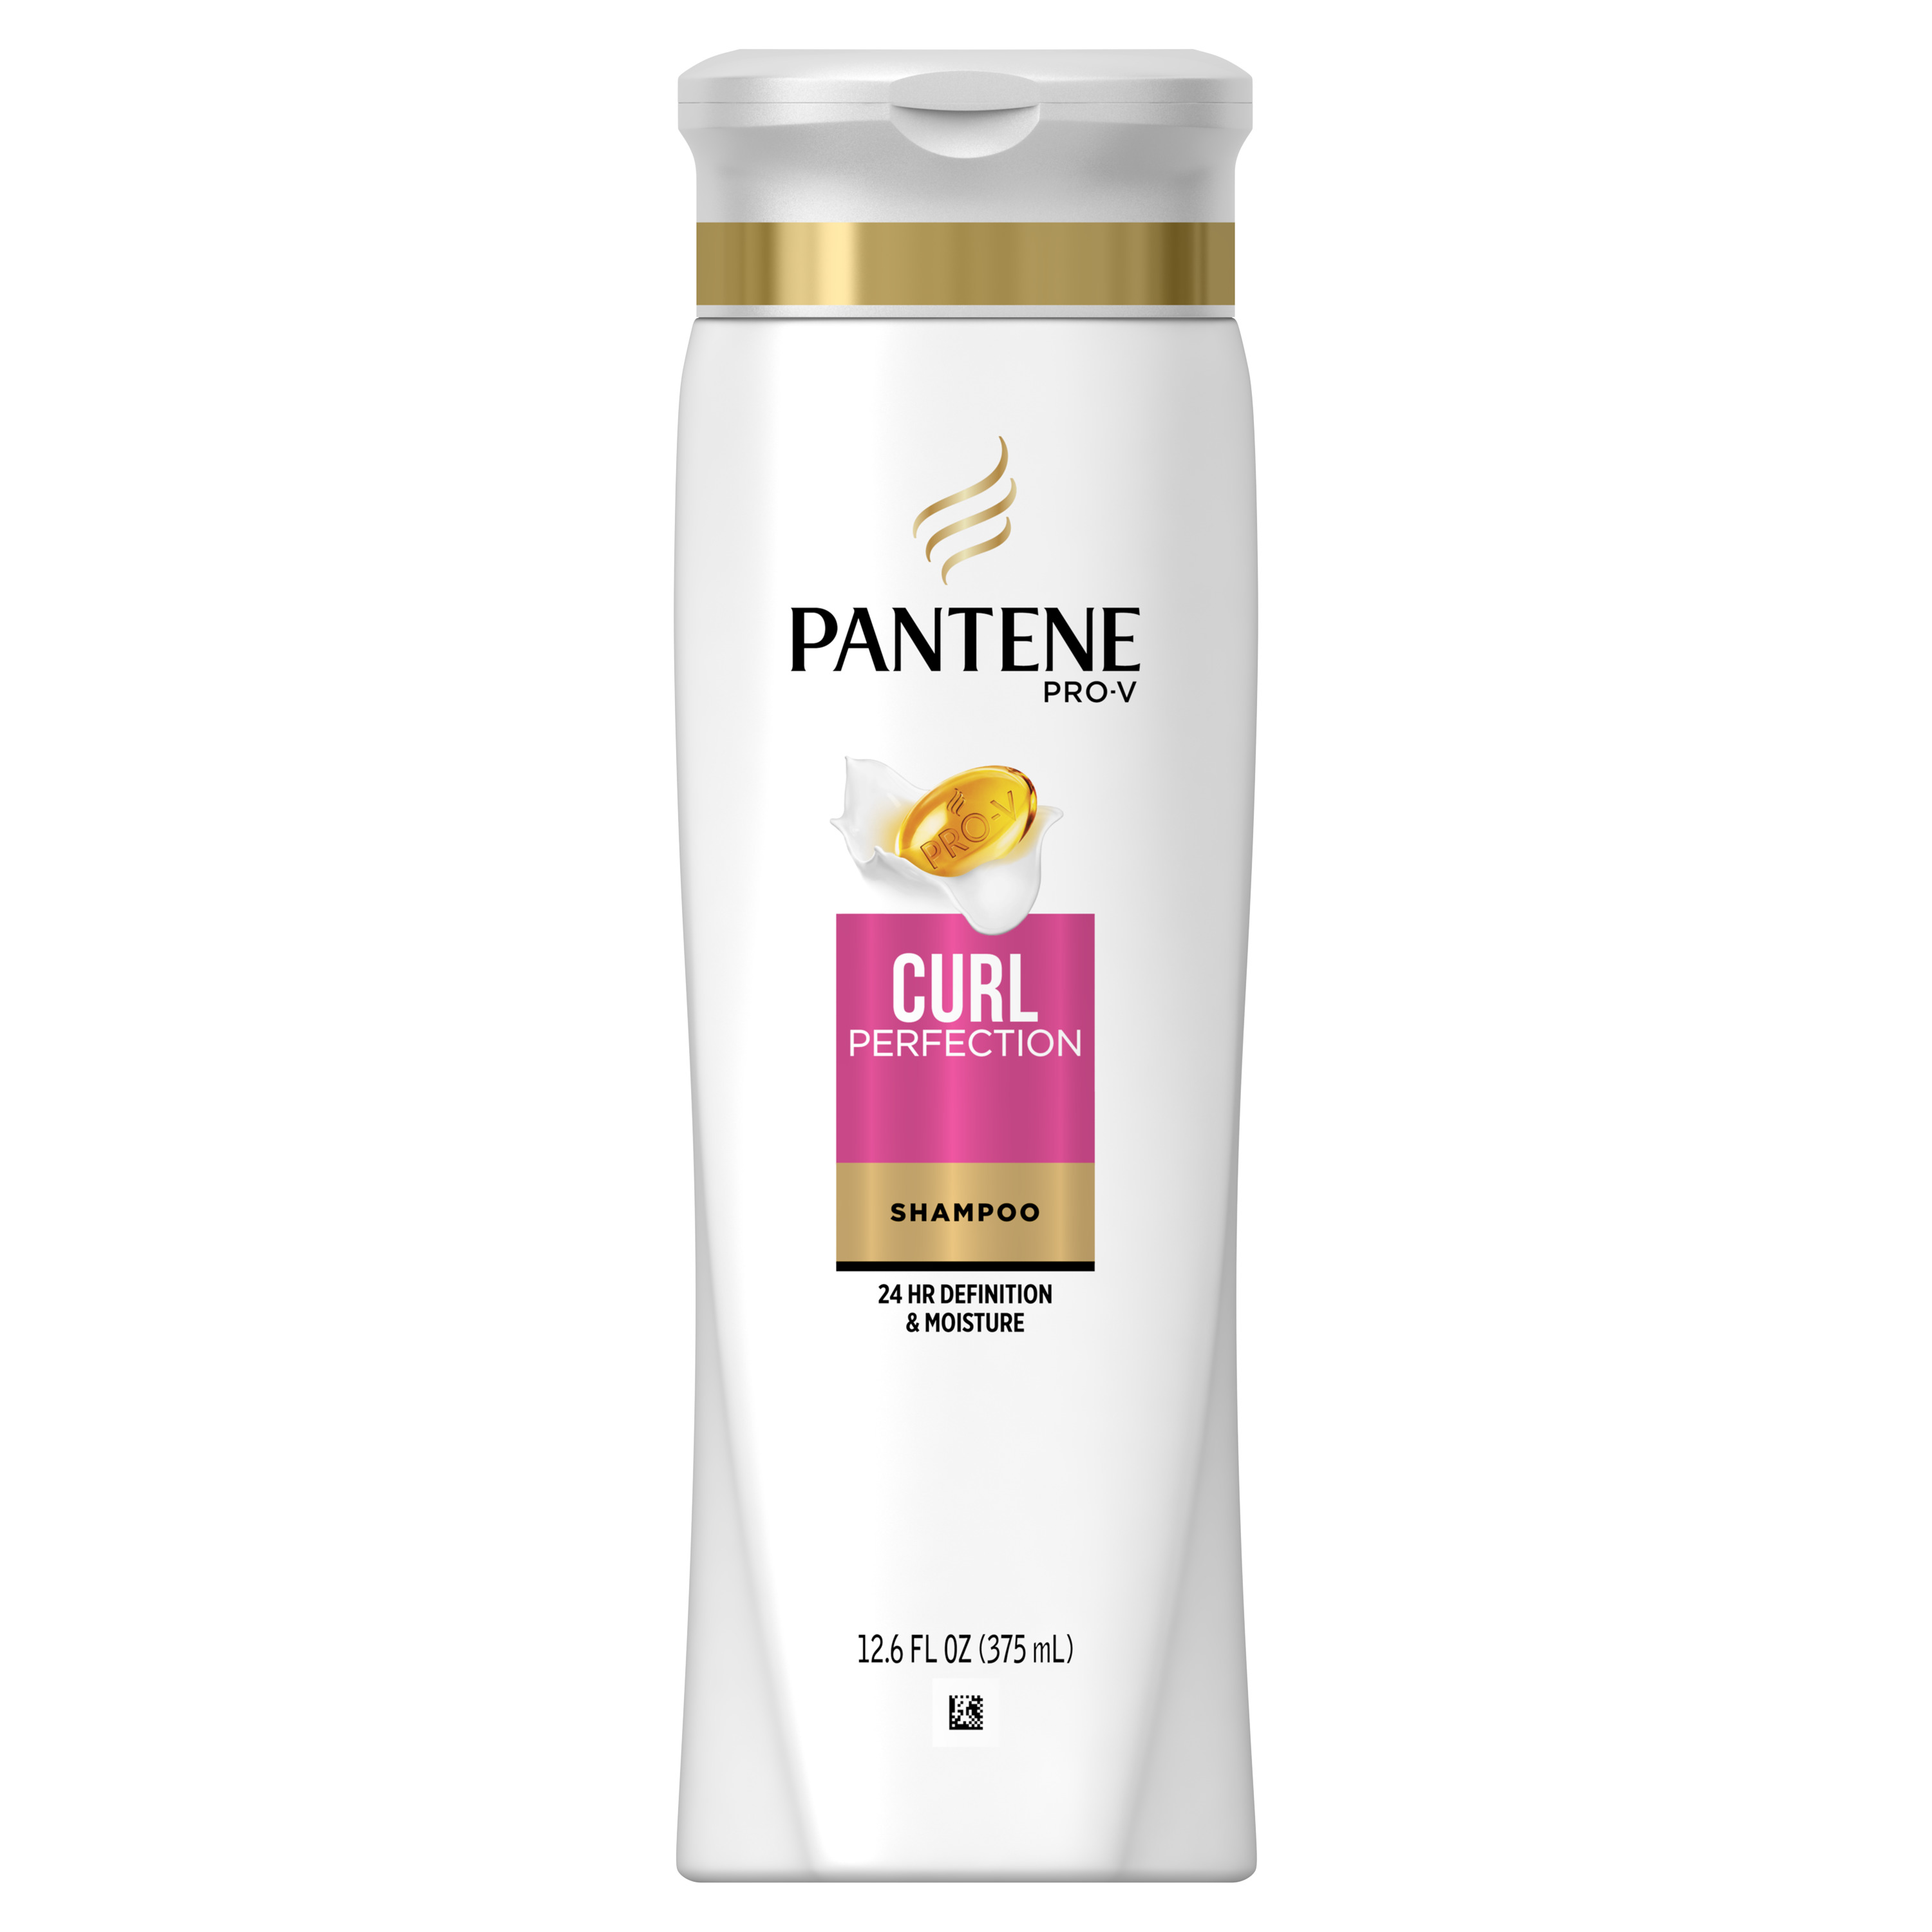 Pantene Pro-V Curl Perfection Shampoo, 12.6 fl oz - image 1 of 6